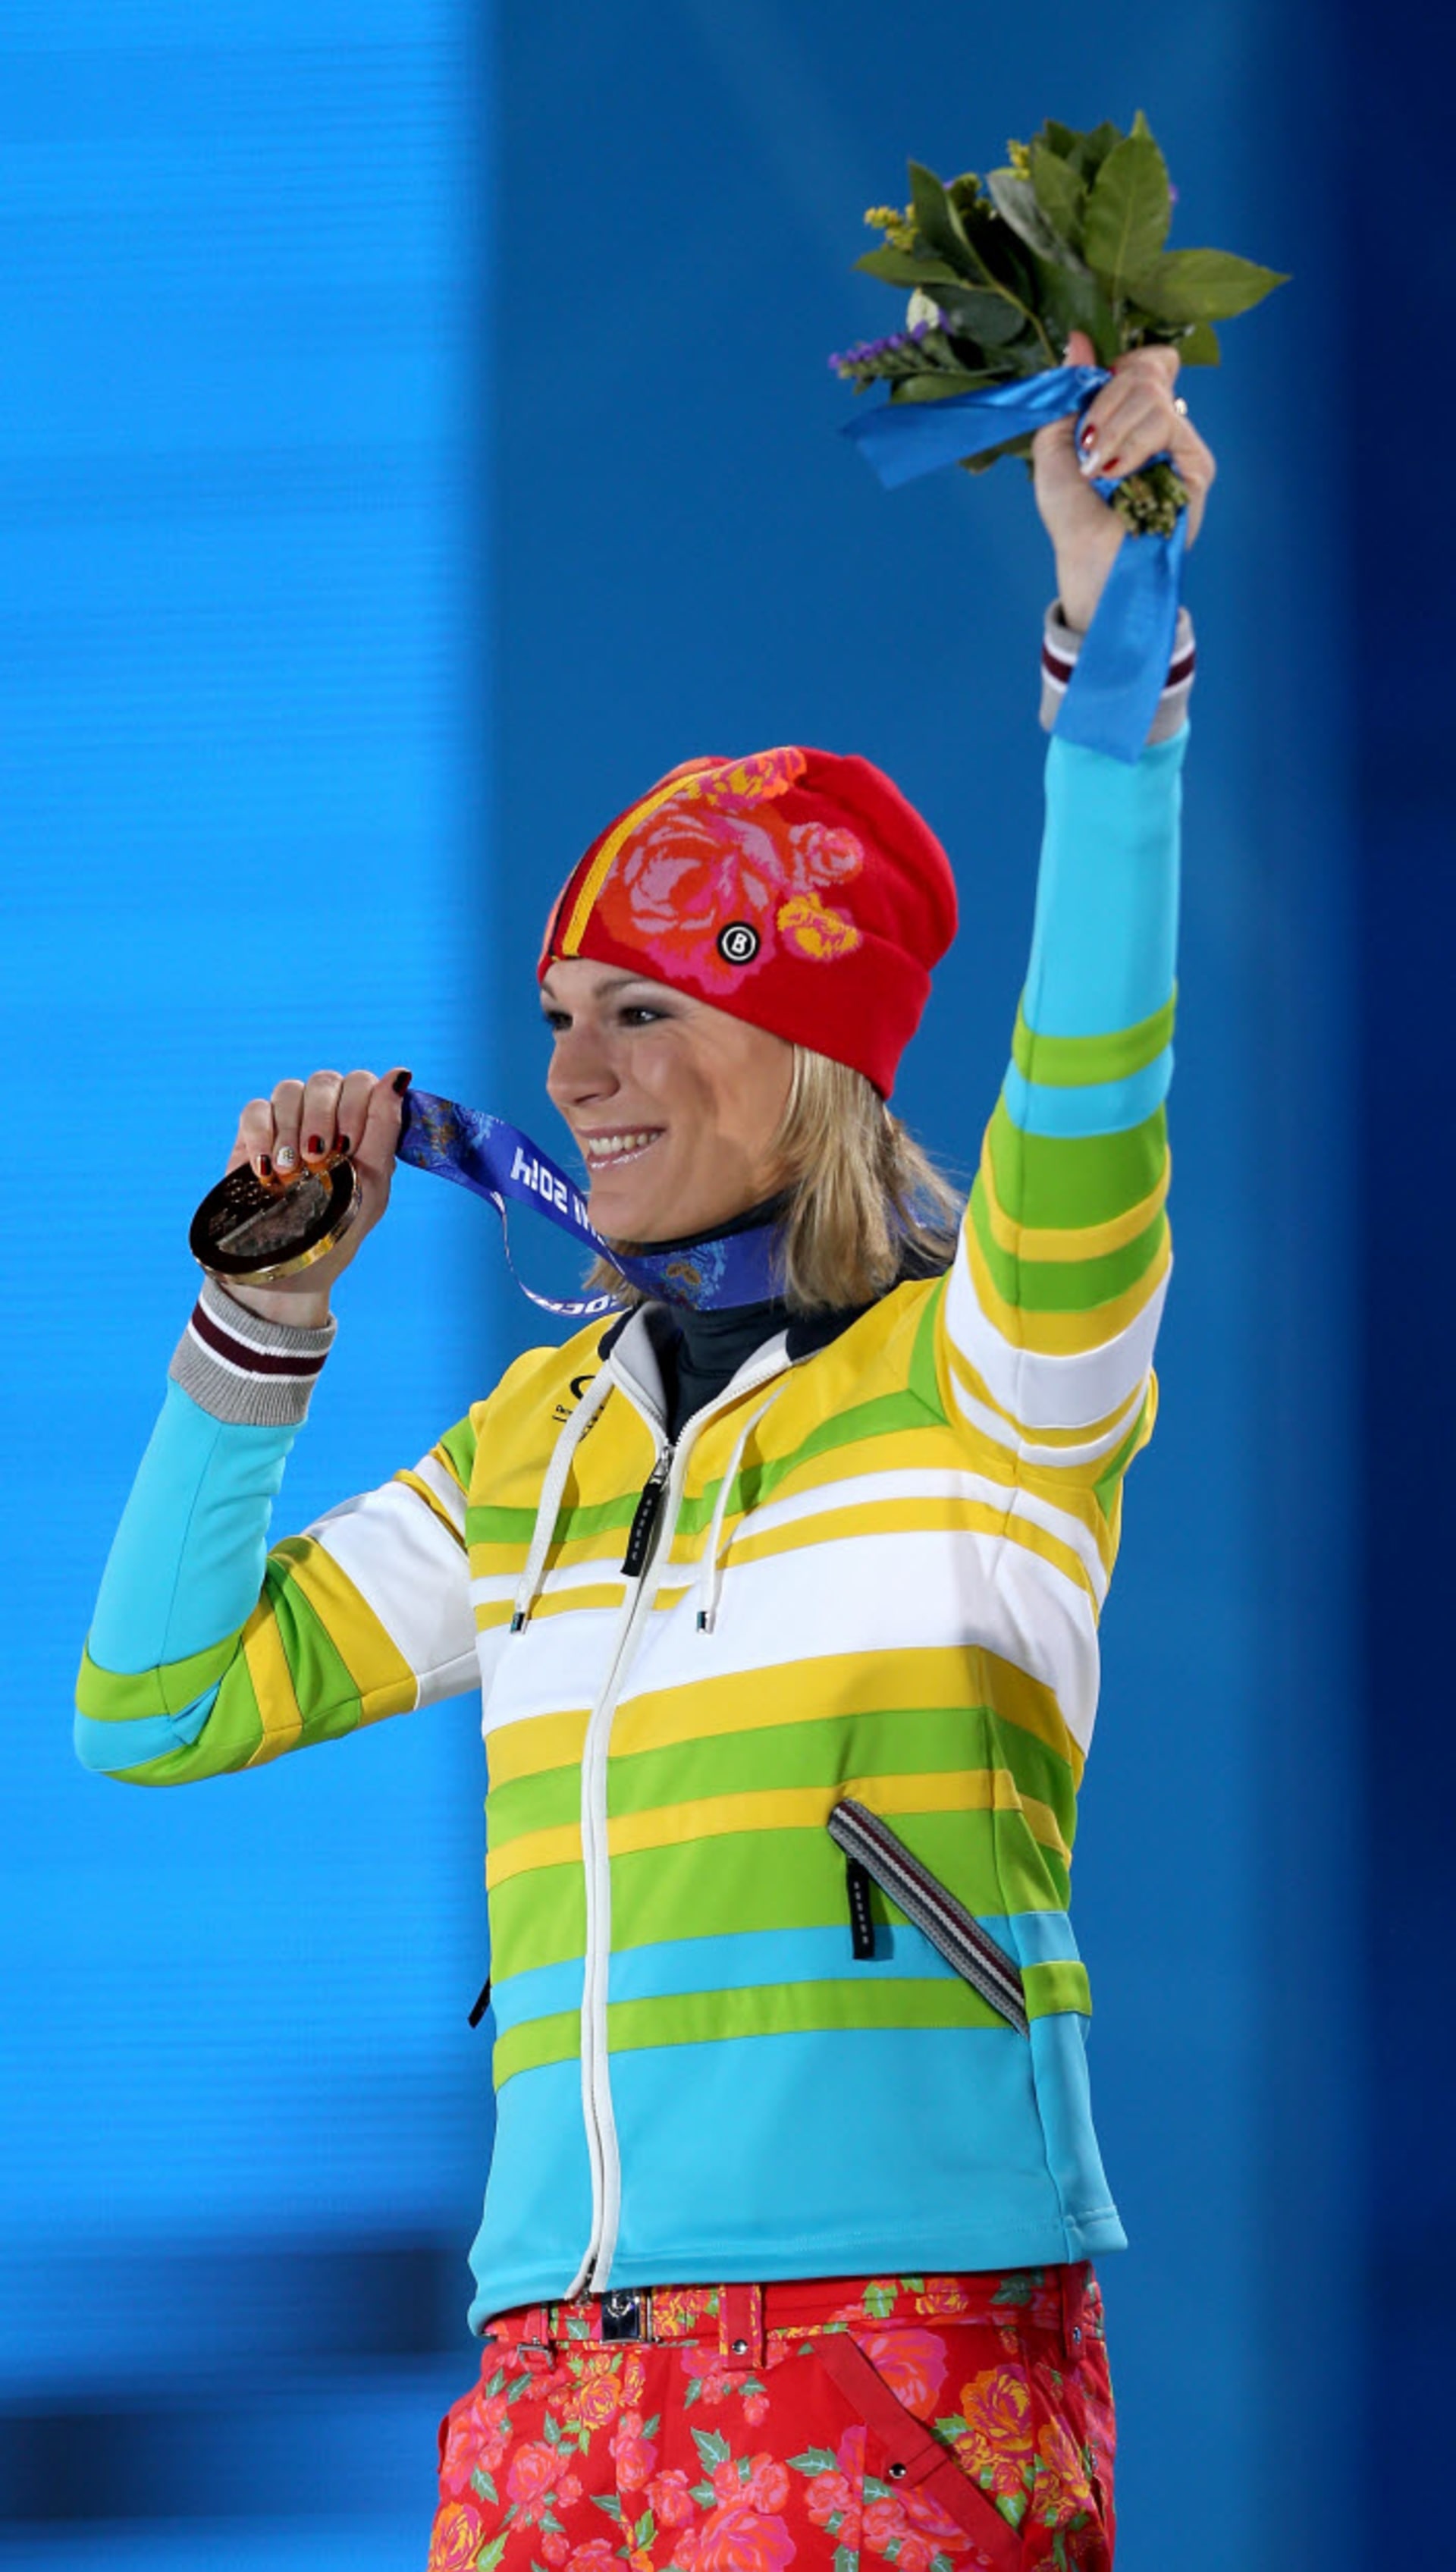 německá lyžařka Maria Hoefl-Riesch